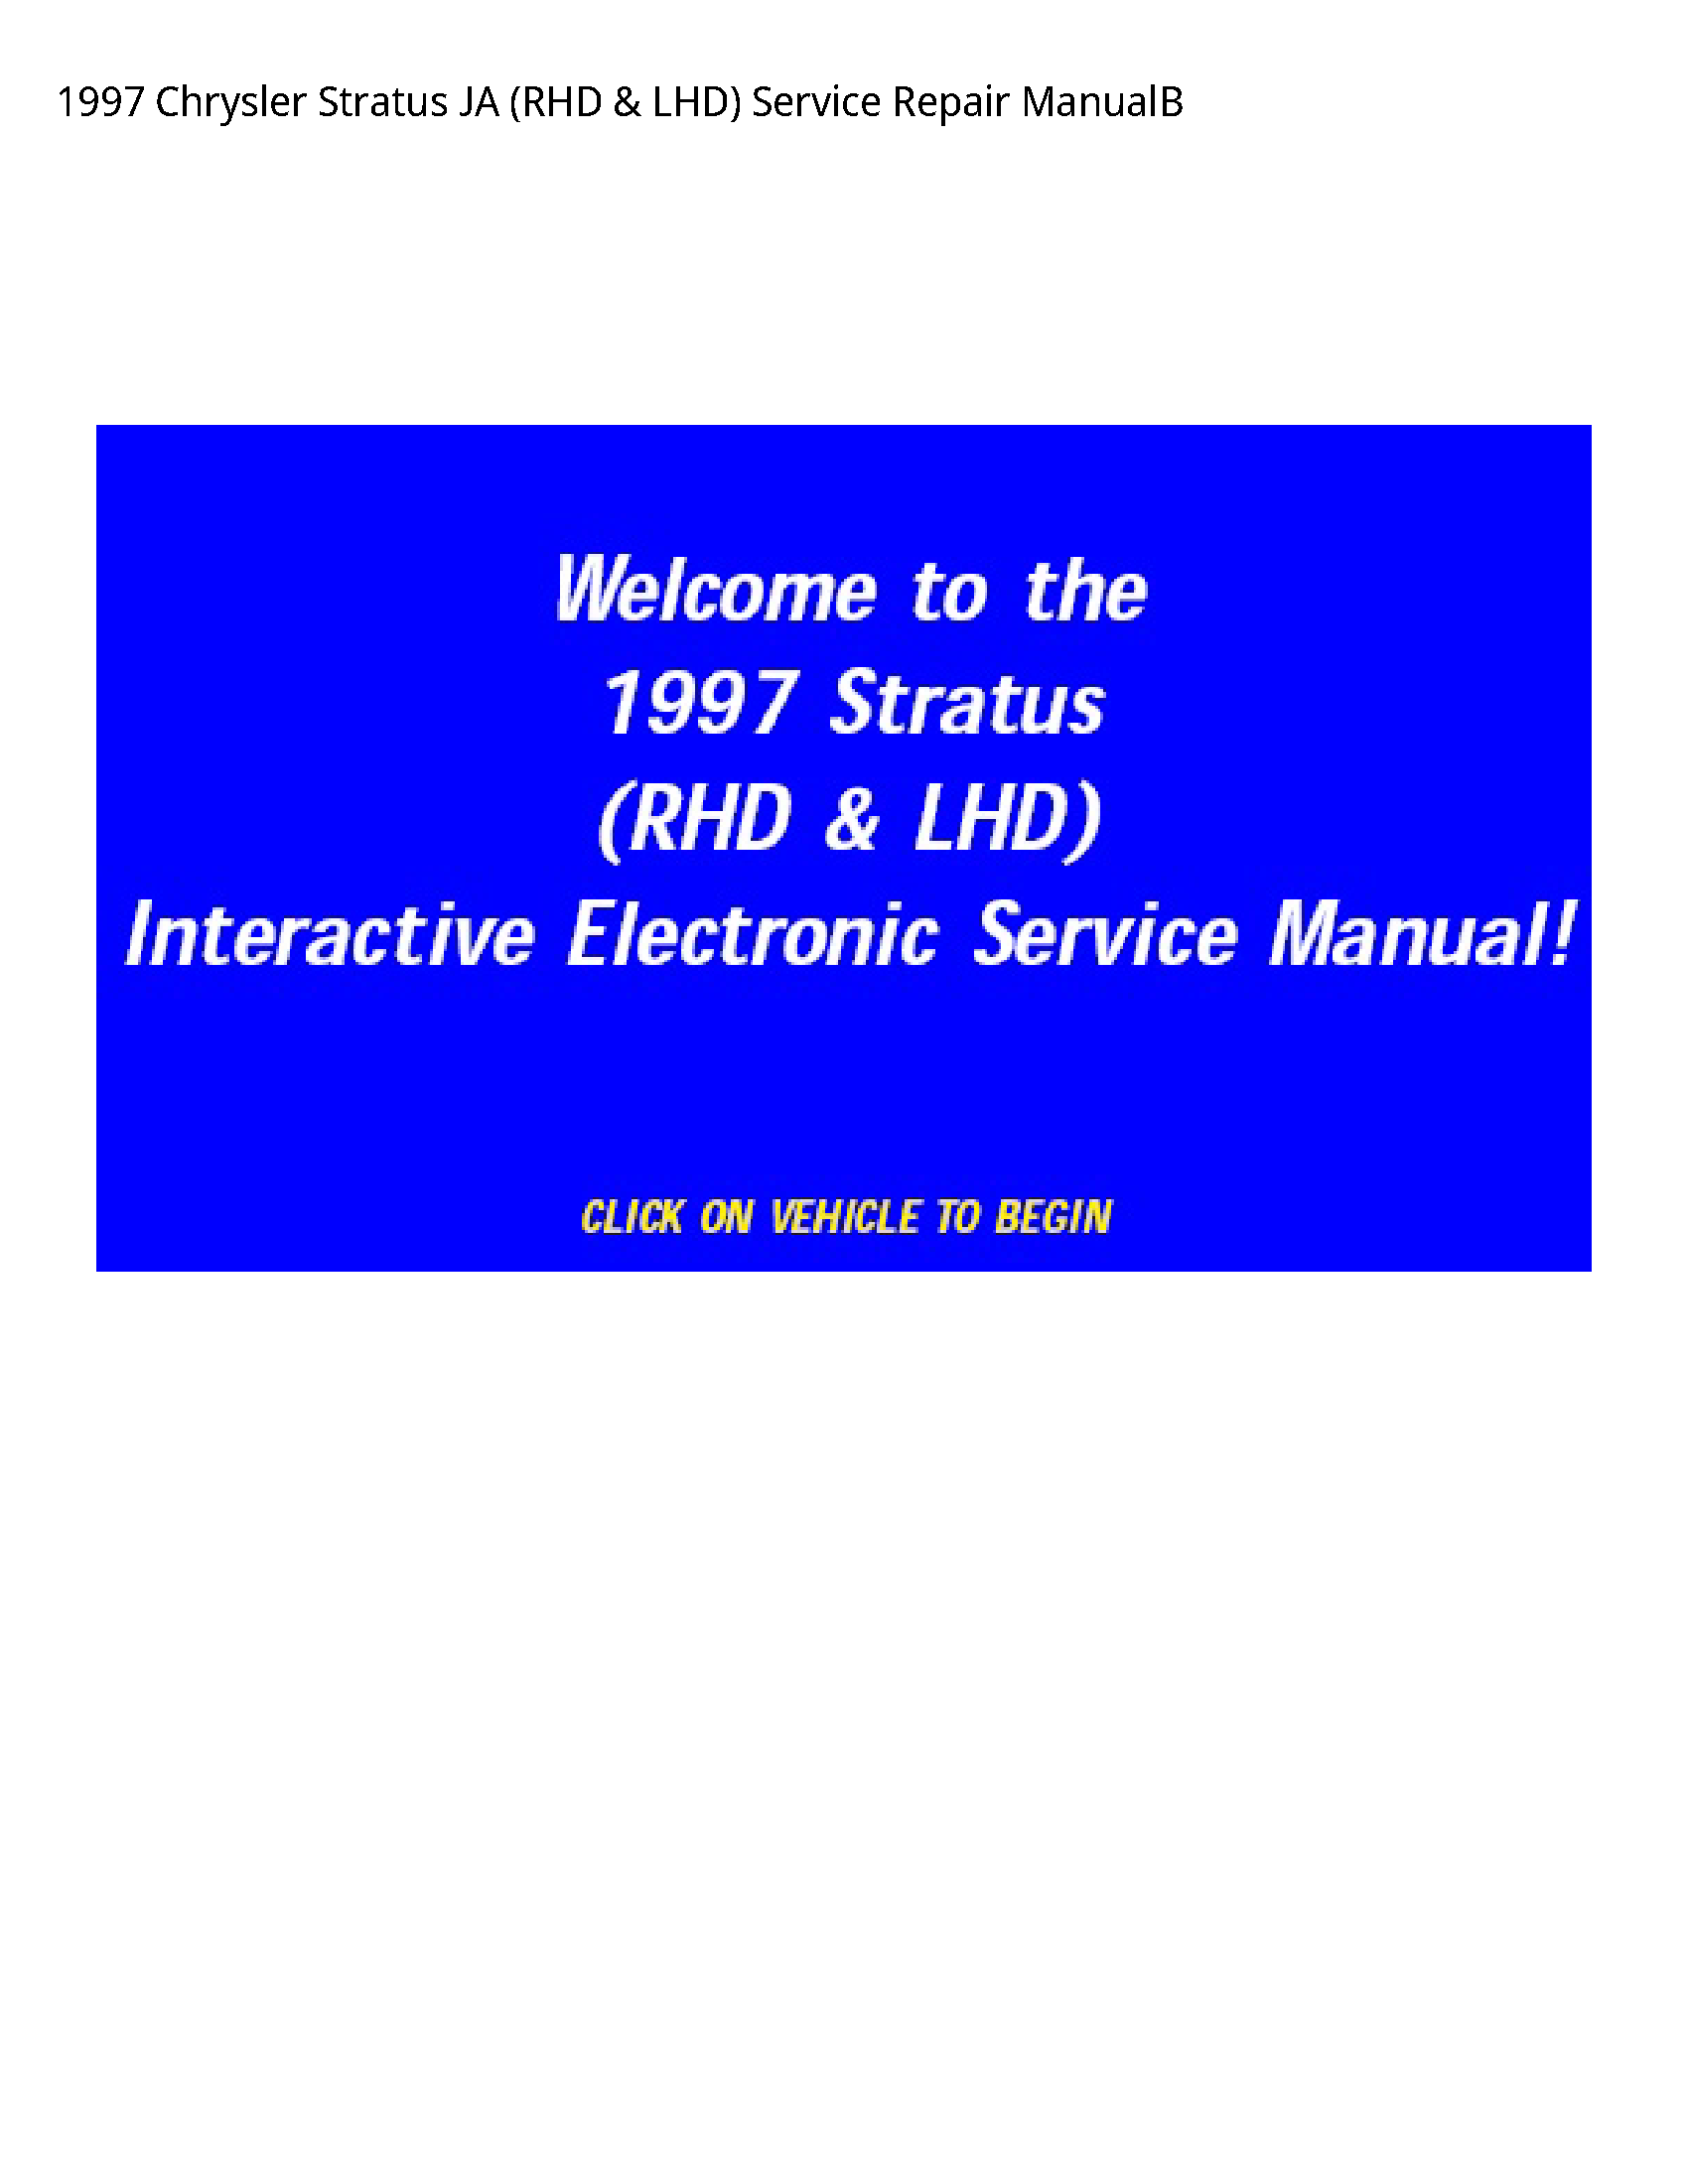 Chrysler Stratus JA (RHD LHD) manual